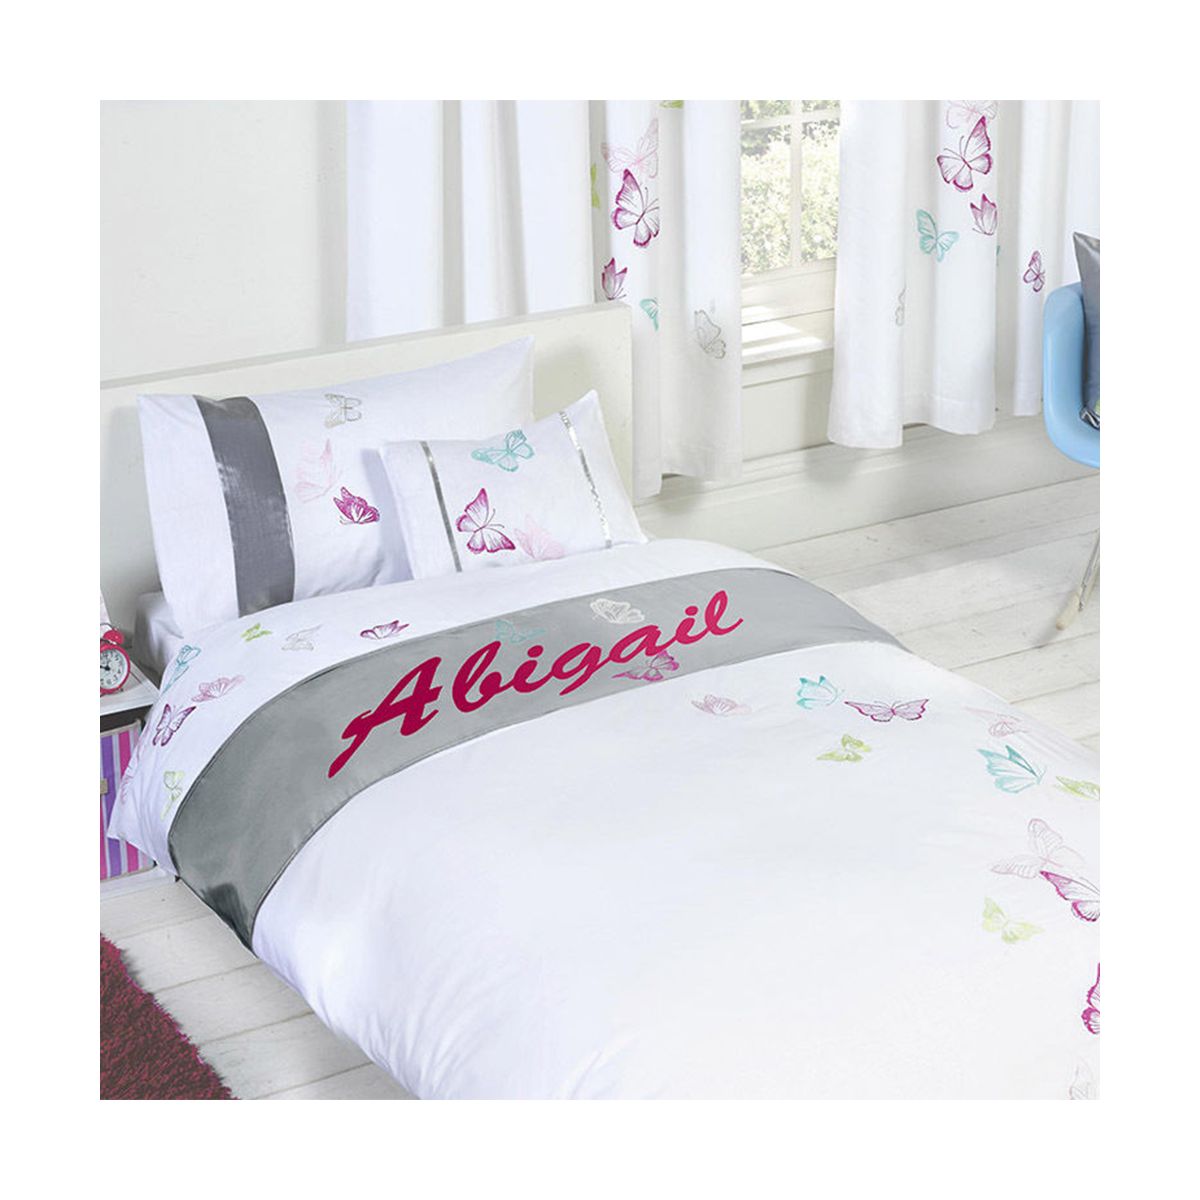 Tobias Baker Personalised Butterfly Duvet Cover Pillow Case Bedding Set - Abigail, Double